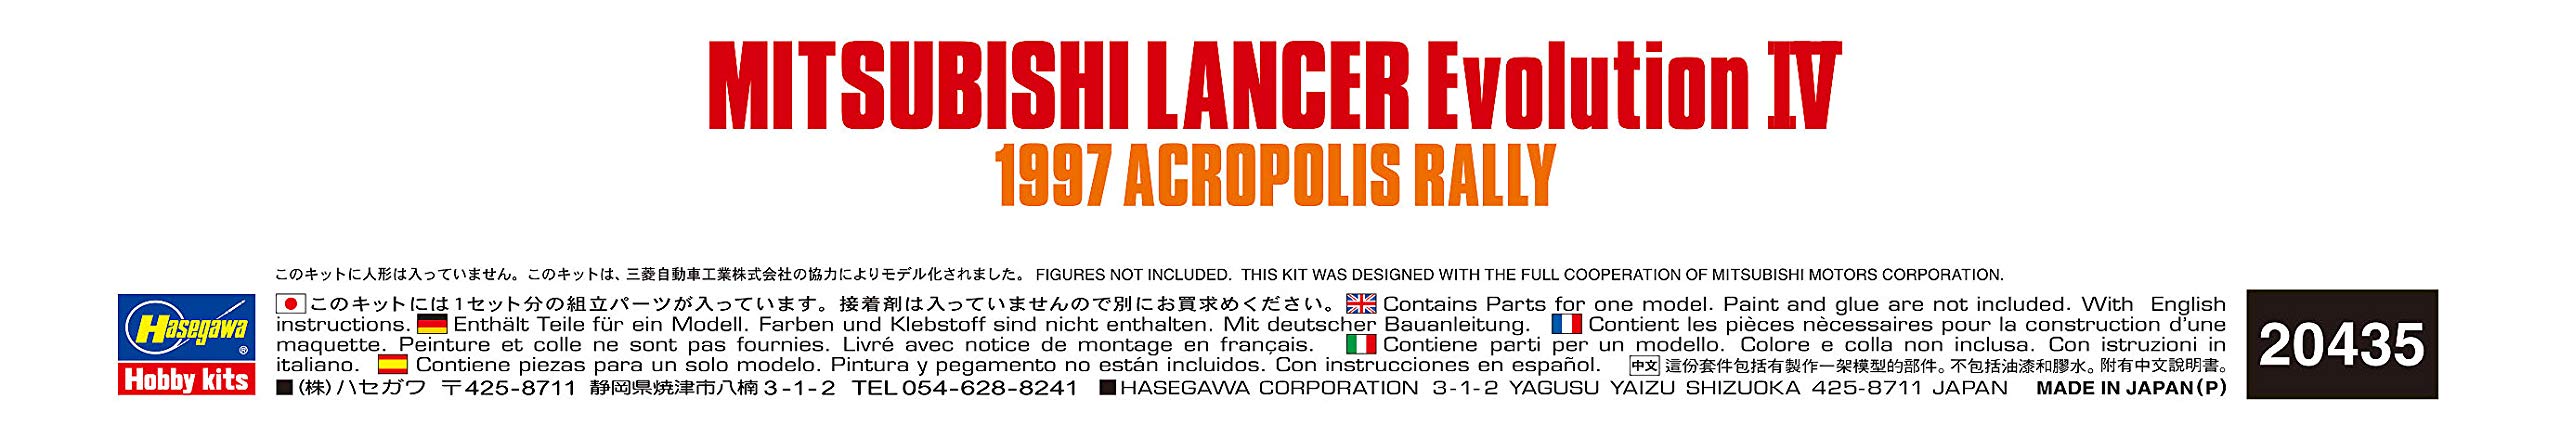 Hasegawa 1/24 Mitsubishi Lancer Evolution IV 1997 Acropolis Rally modèle en plastique jouet